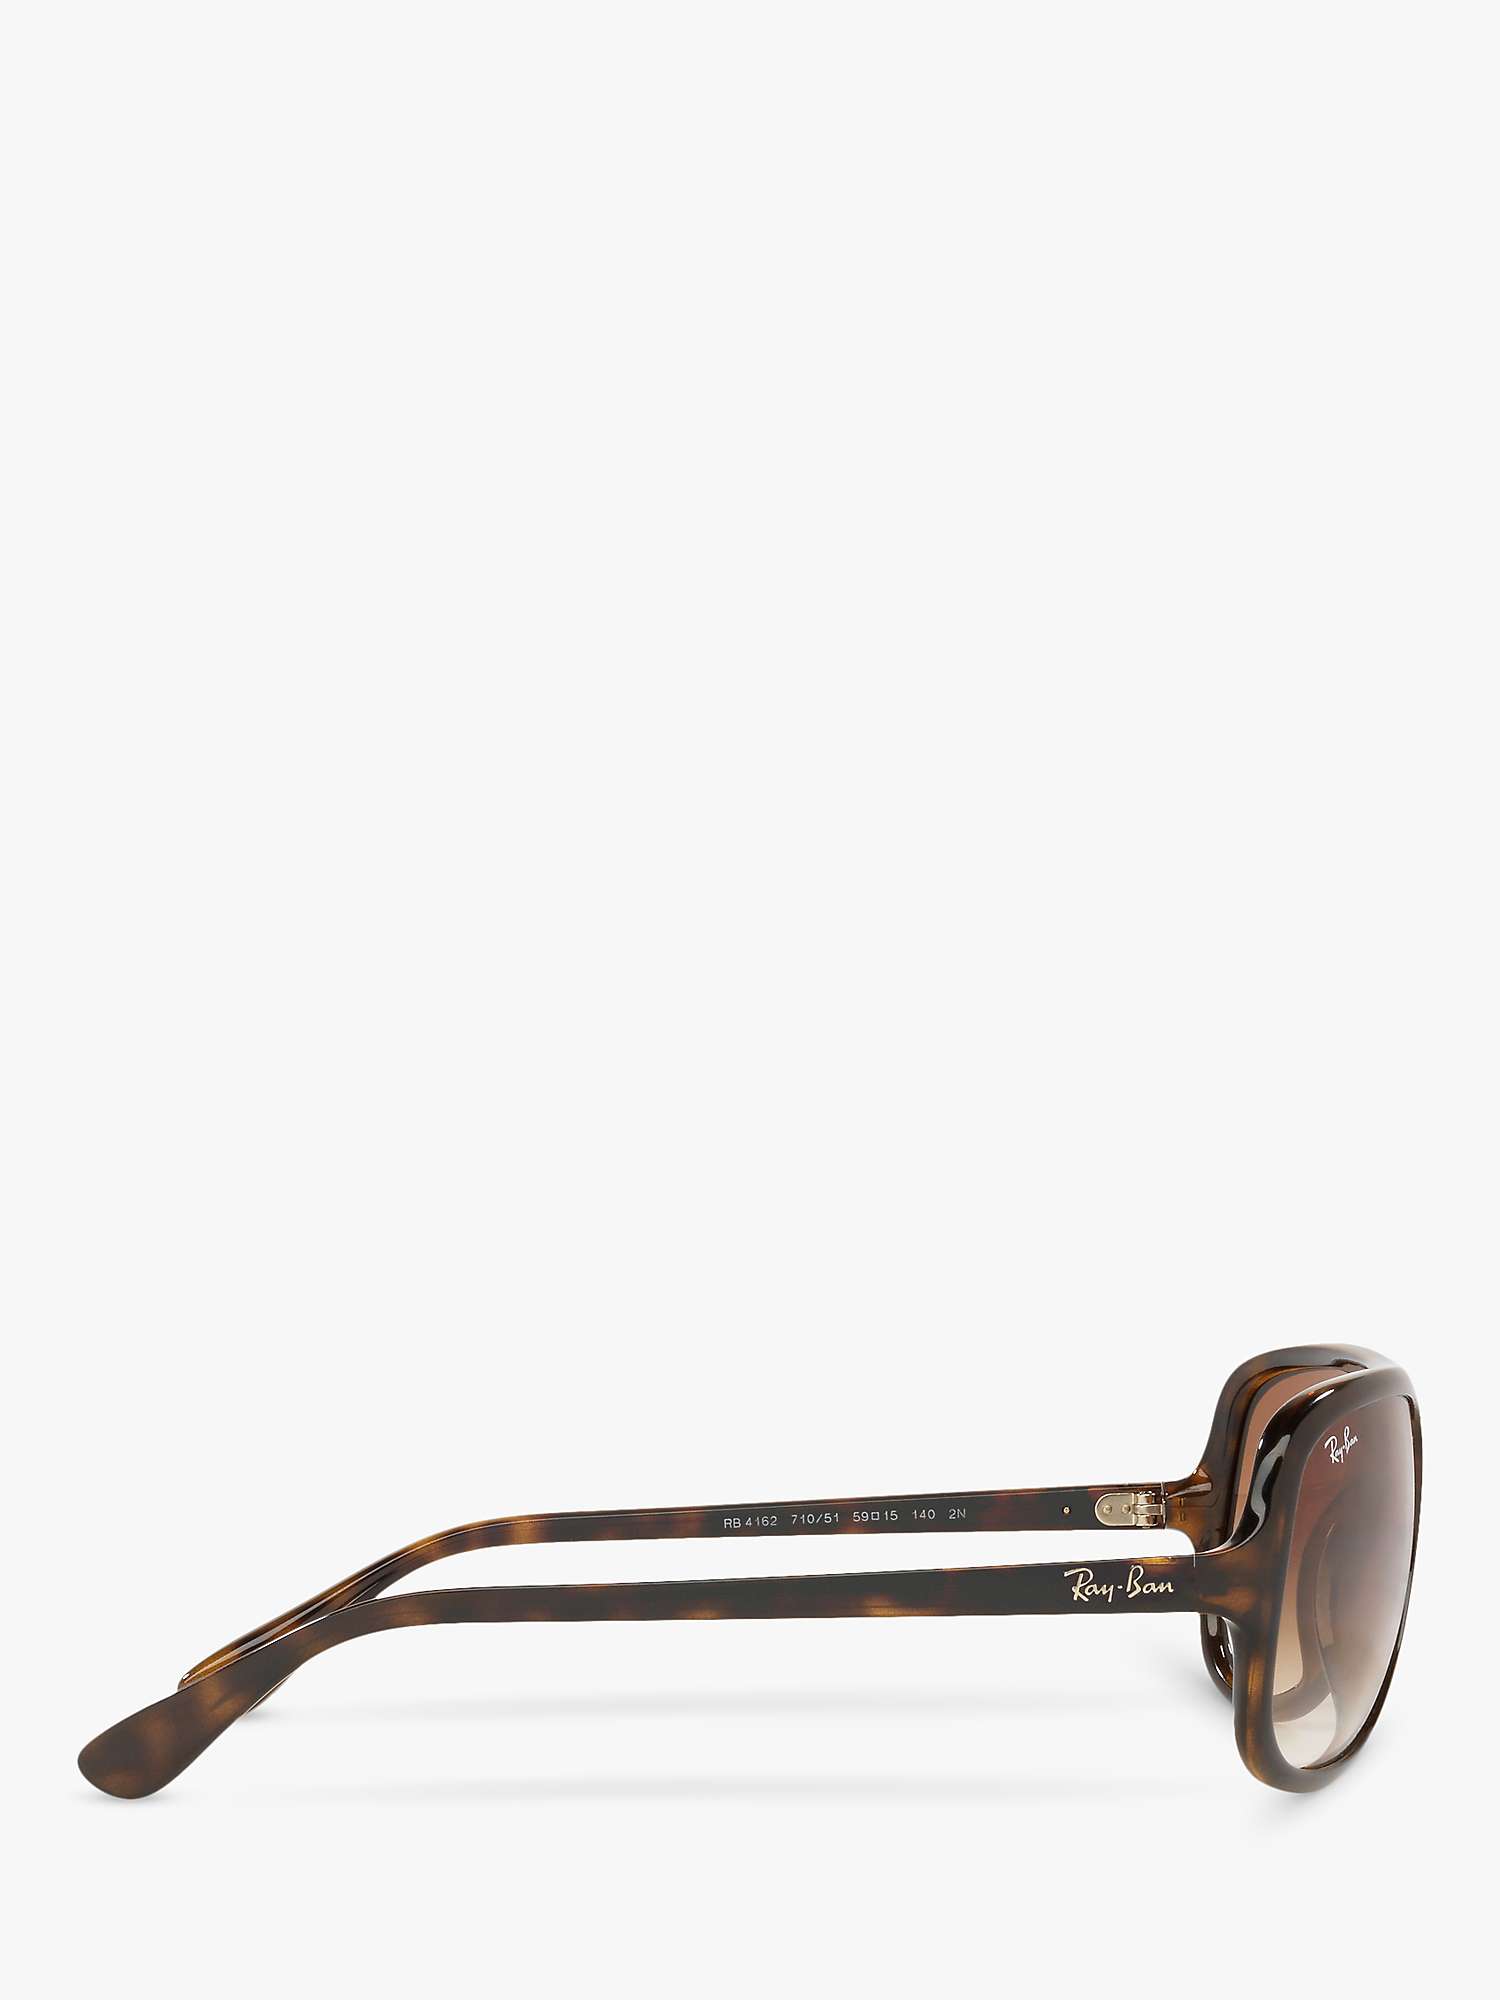 Buy Ray-Ban RB4162 Men's Pilot Sunglasses, Light Havana/Brown Online at johnlewis.com